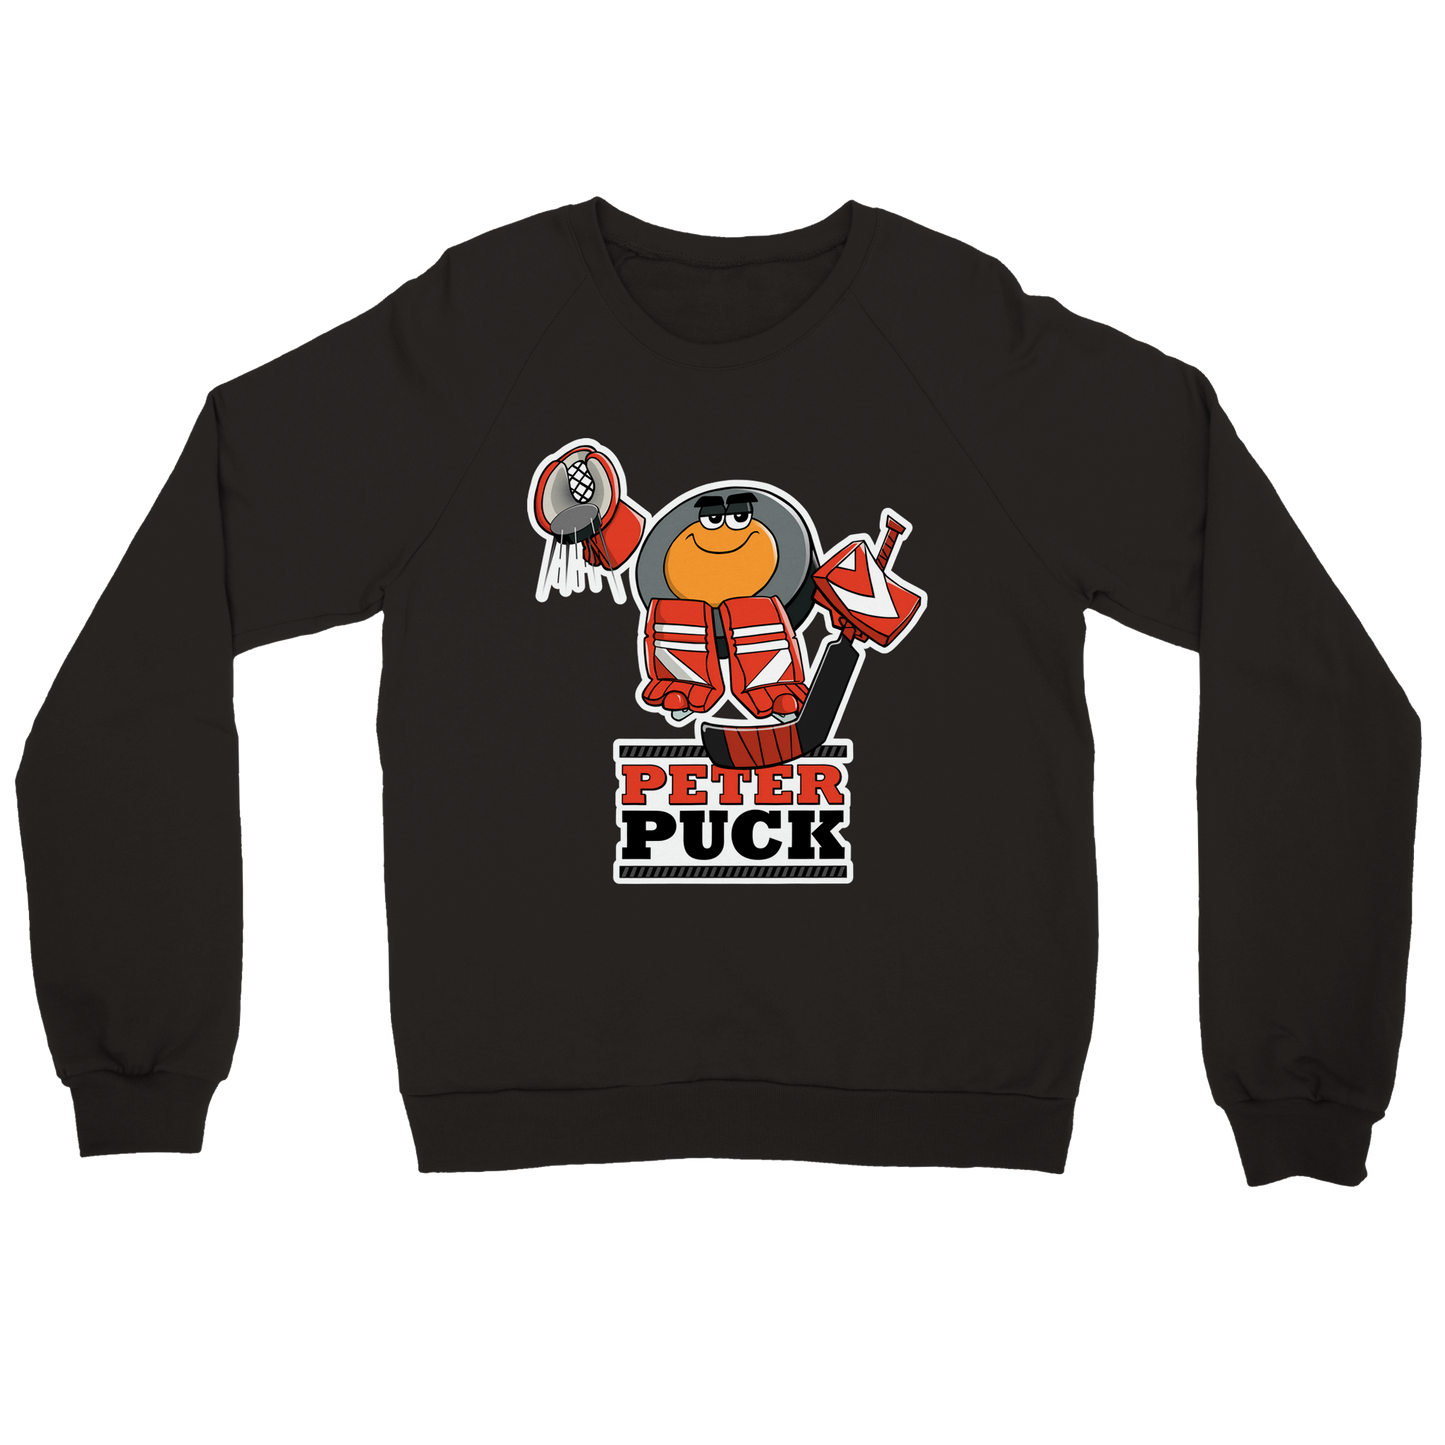 Peter Puck Plays Goalie Mens Premium Crewneck Sweatshirt